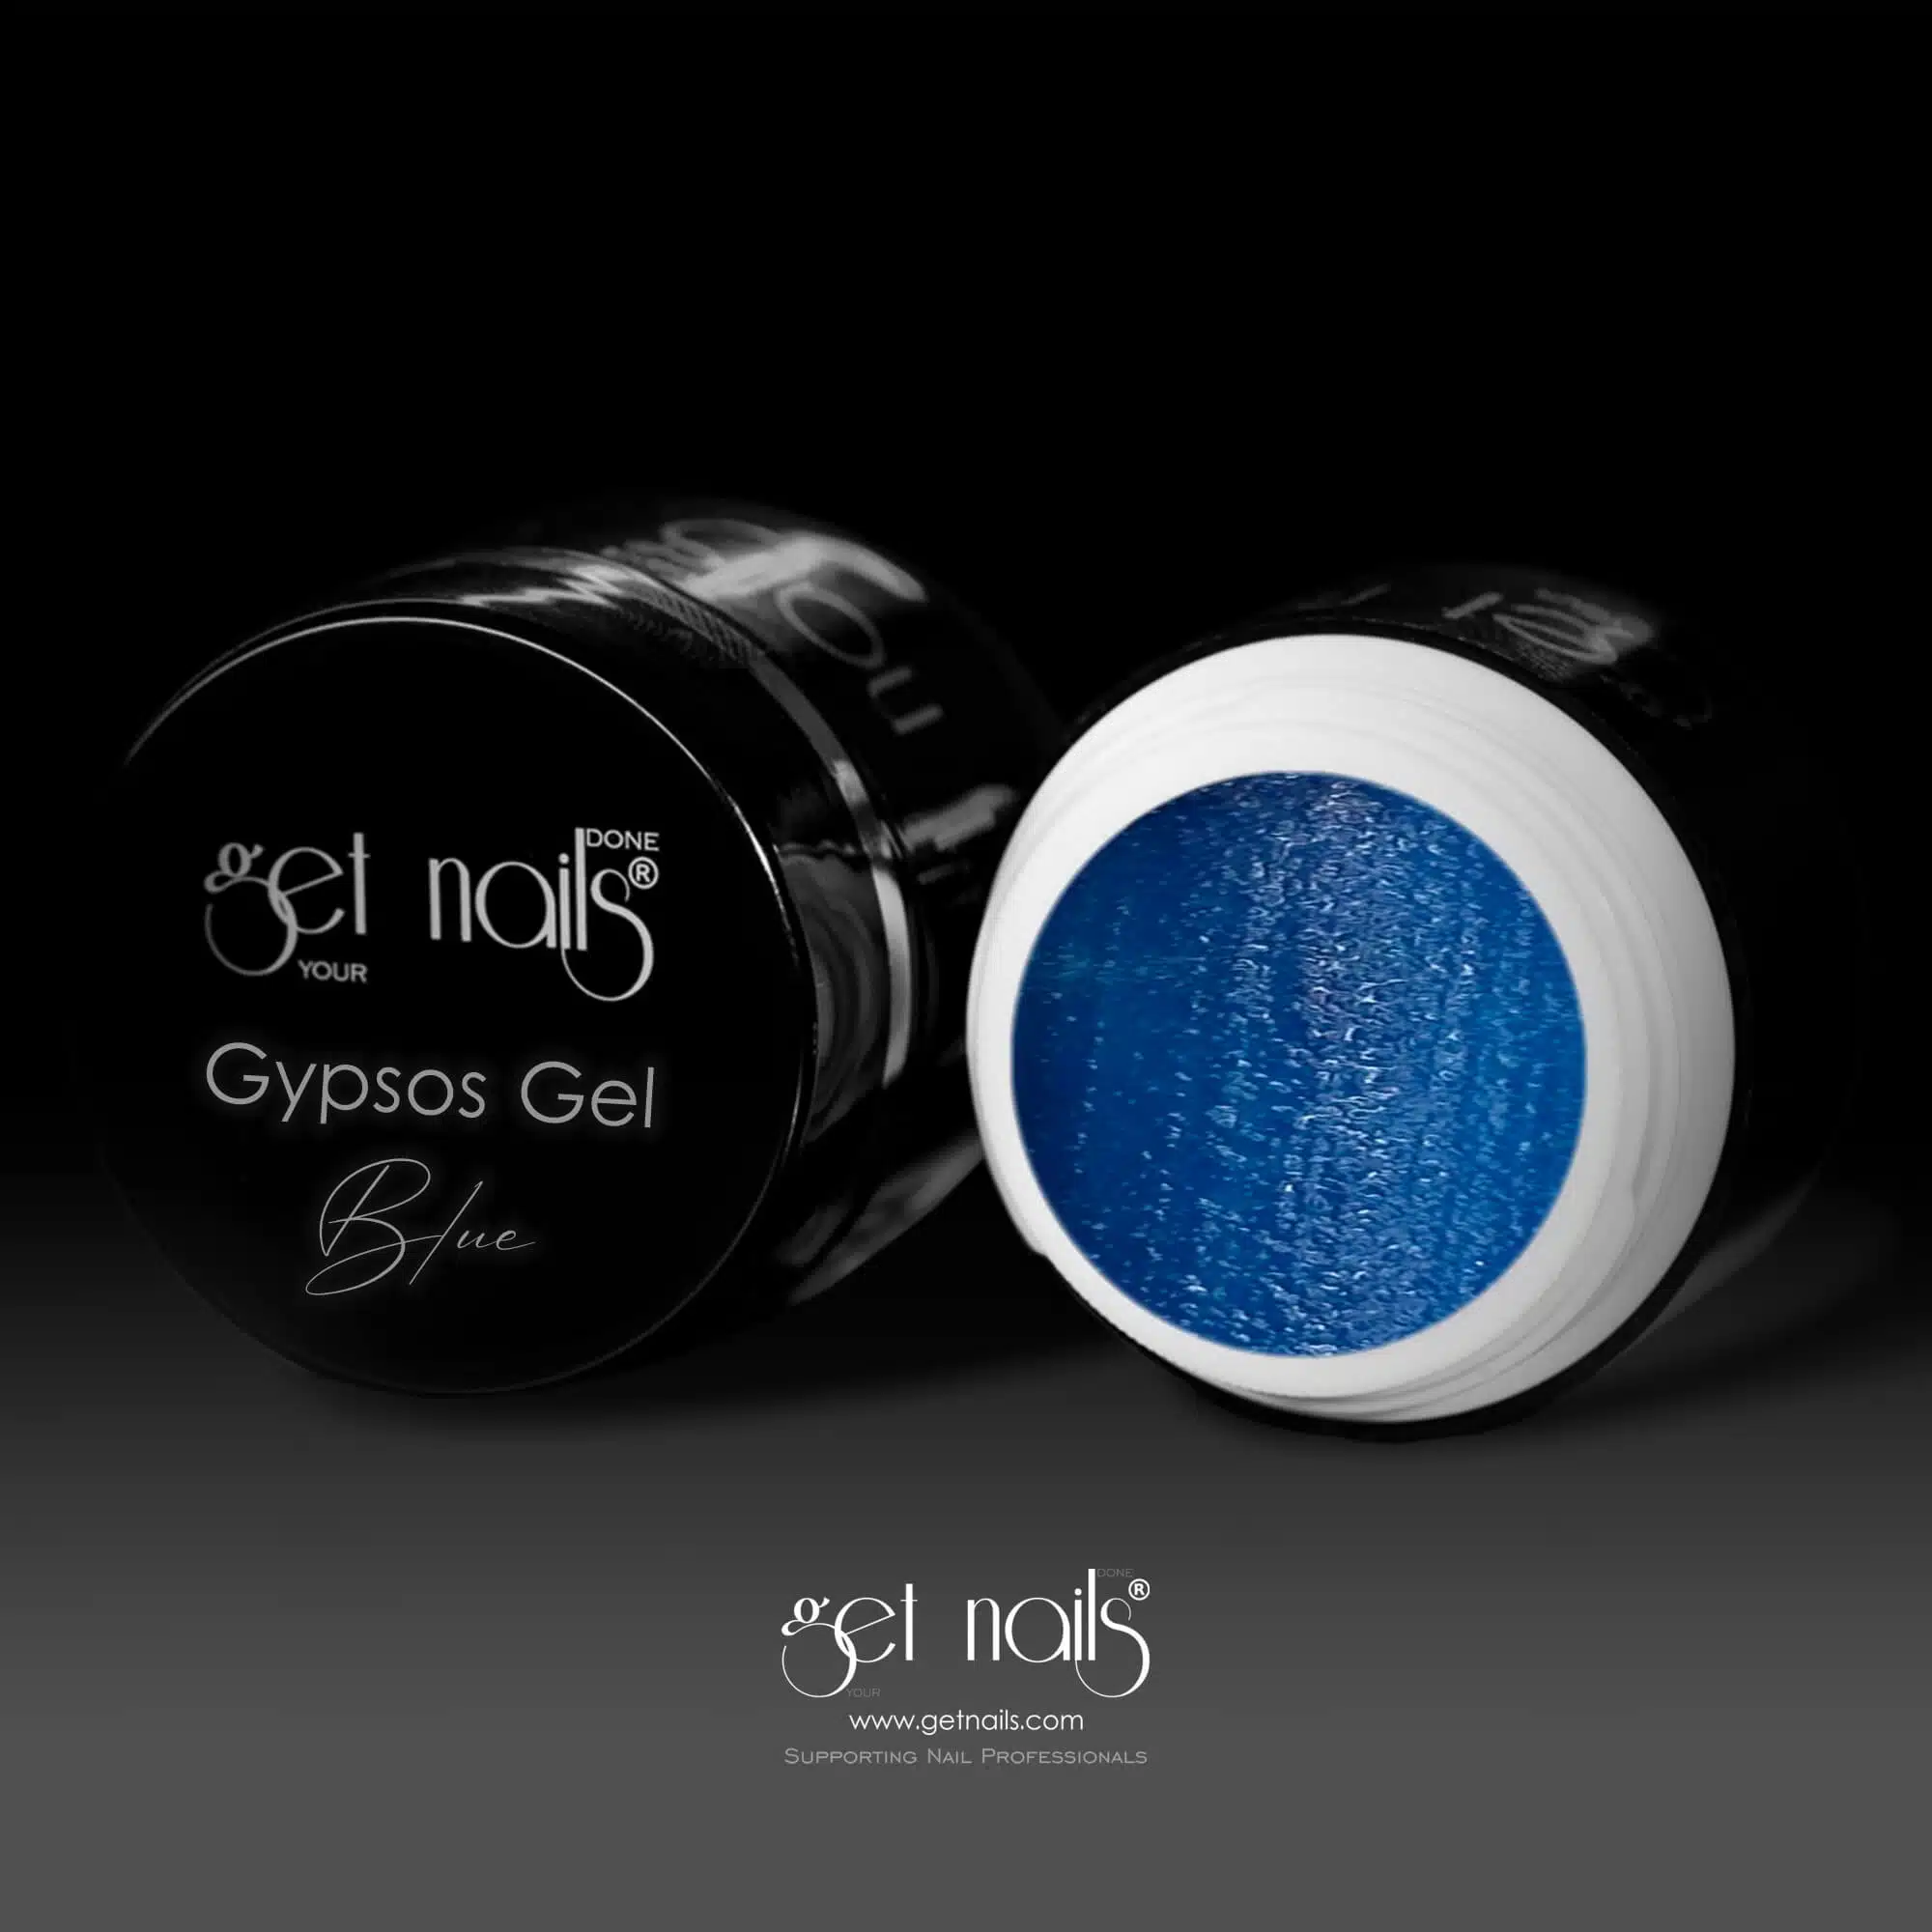 Get Nails Austria - Гель Gypsos Blue 5g